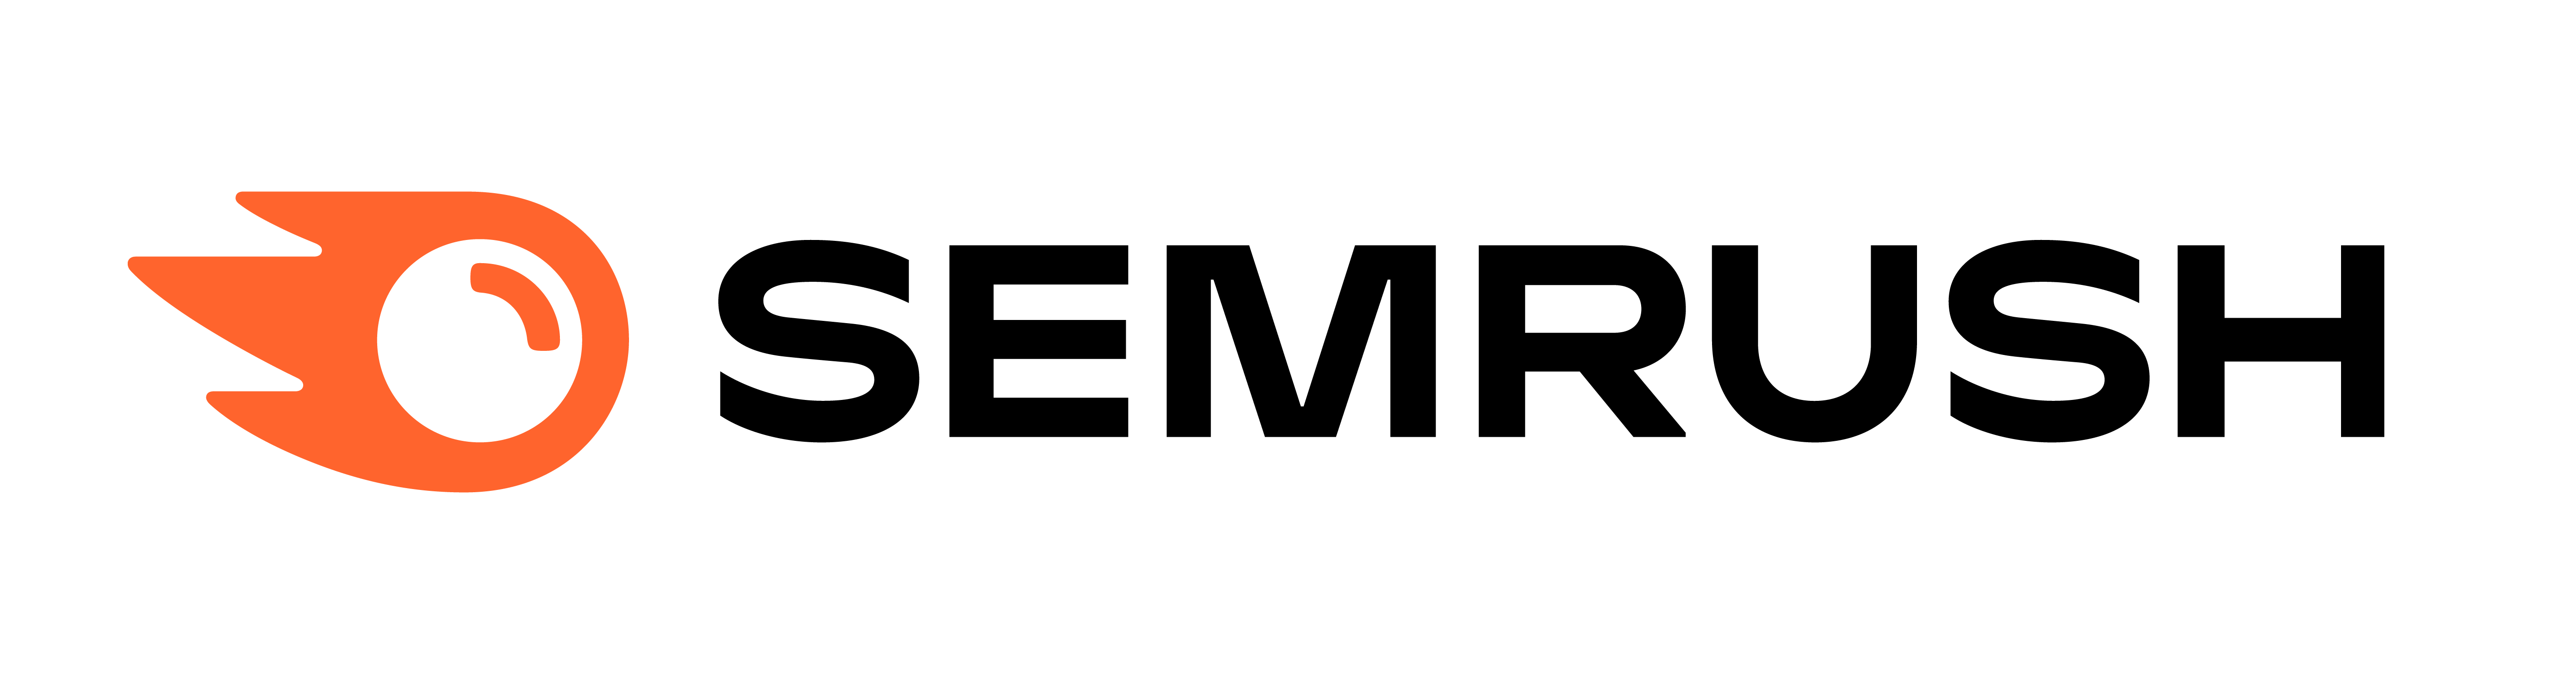 Semrush official logo